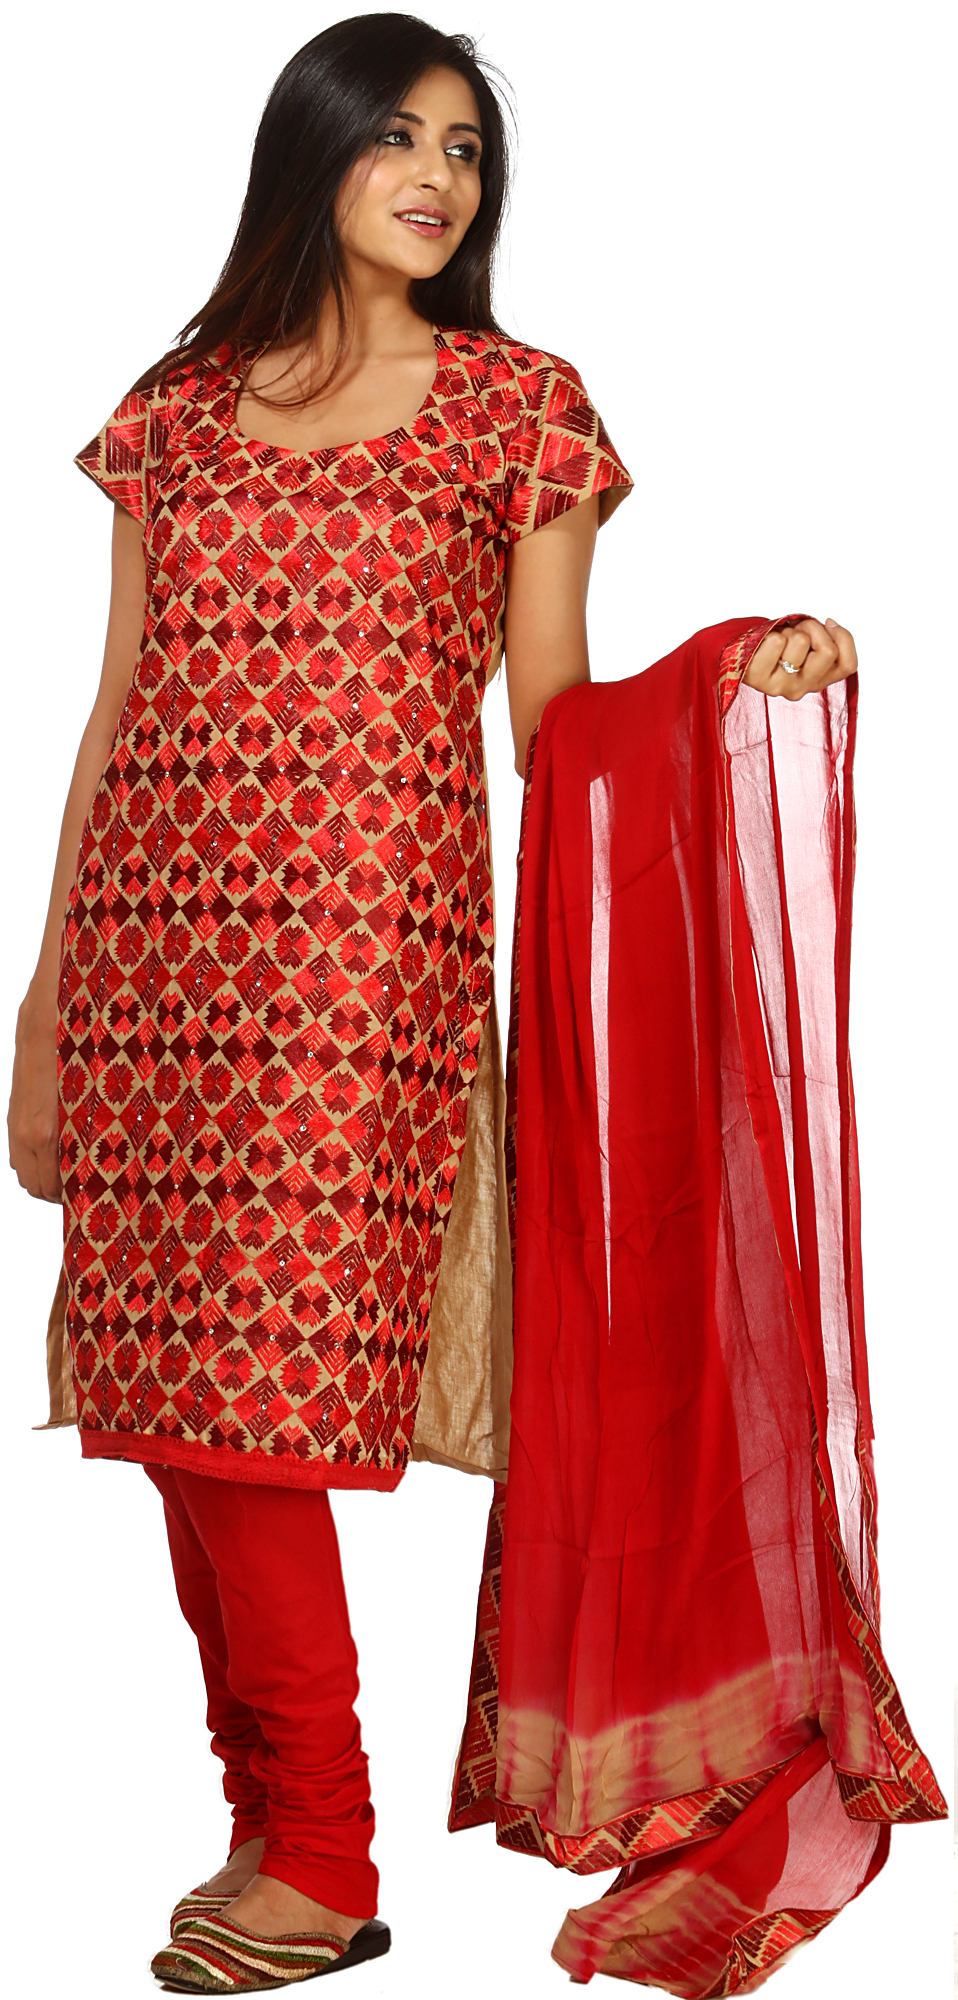 Khaki And Red Phulkari Suit From Punjab Exotic India Art